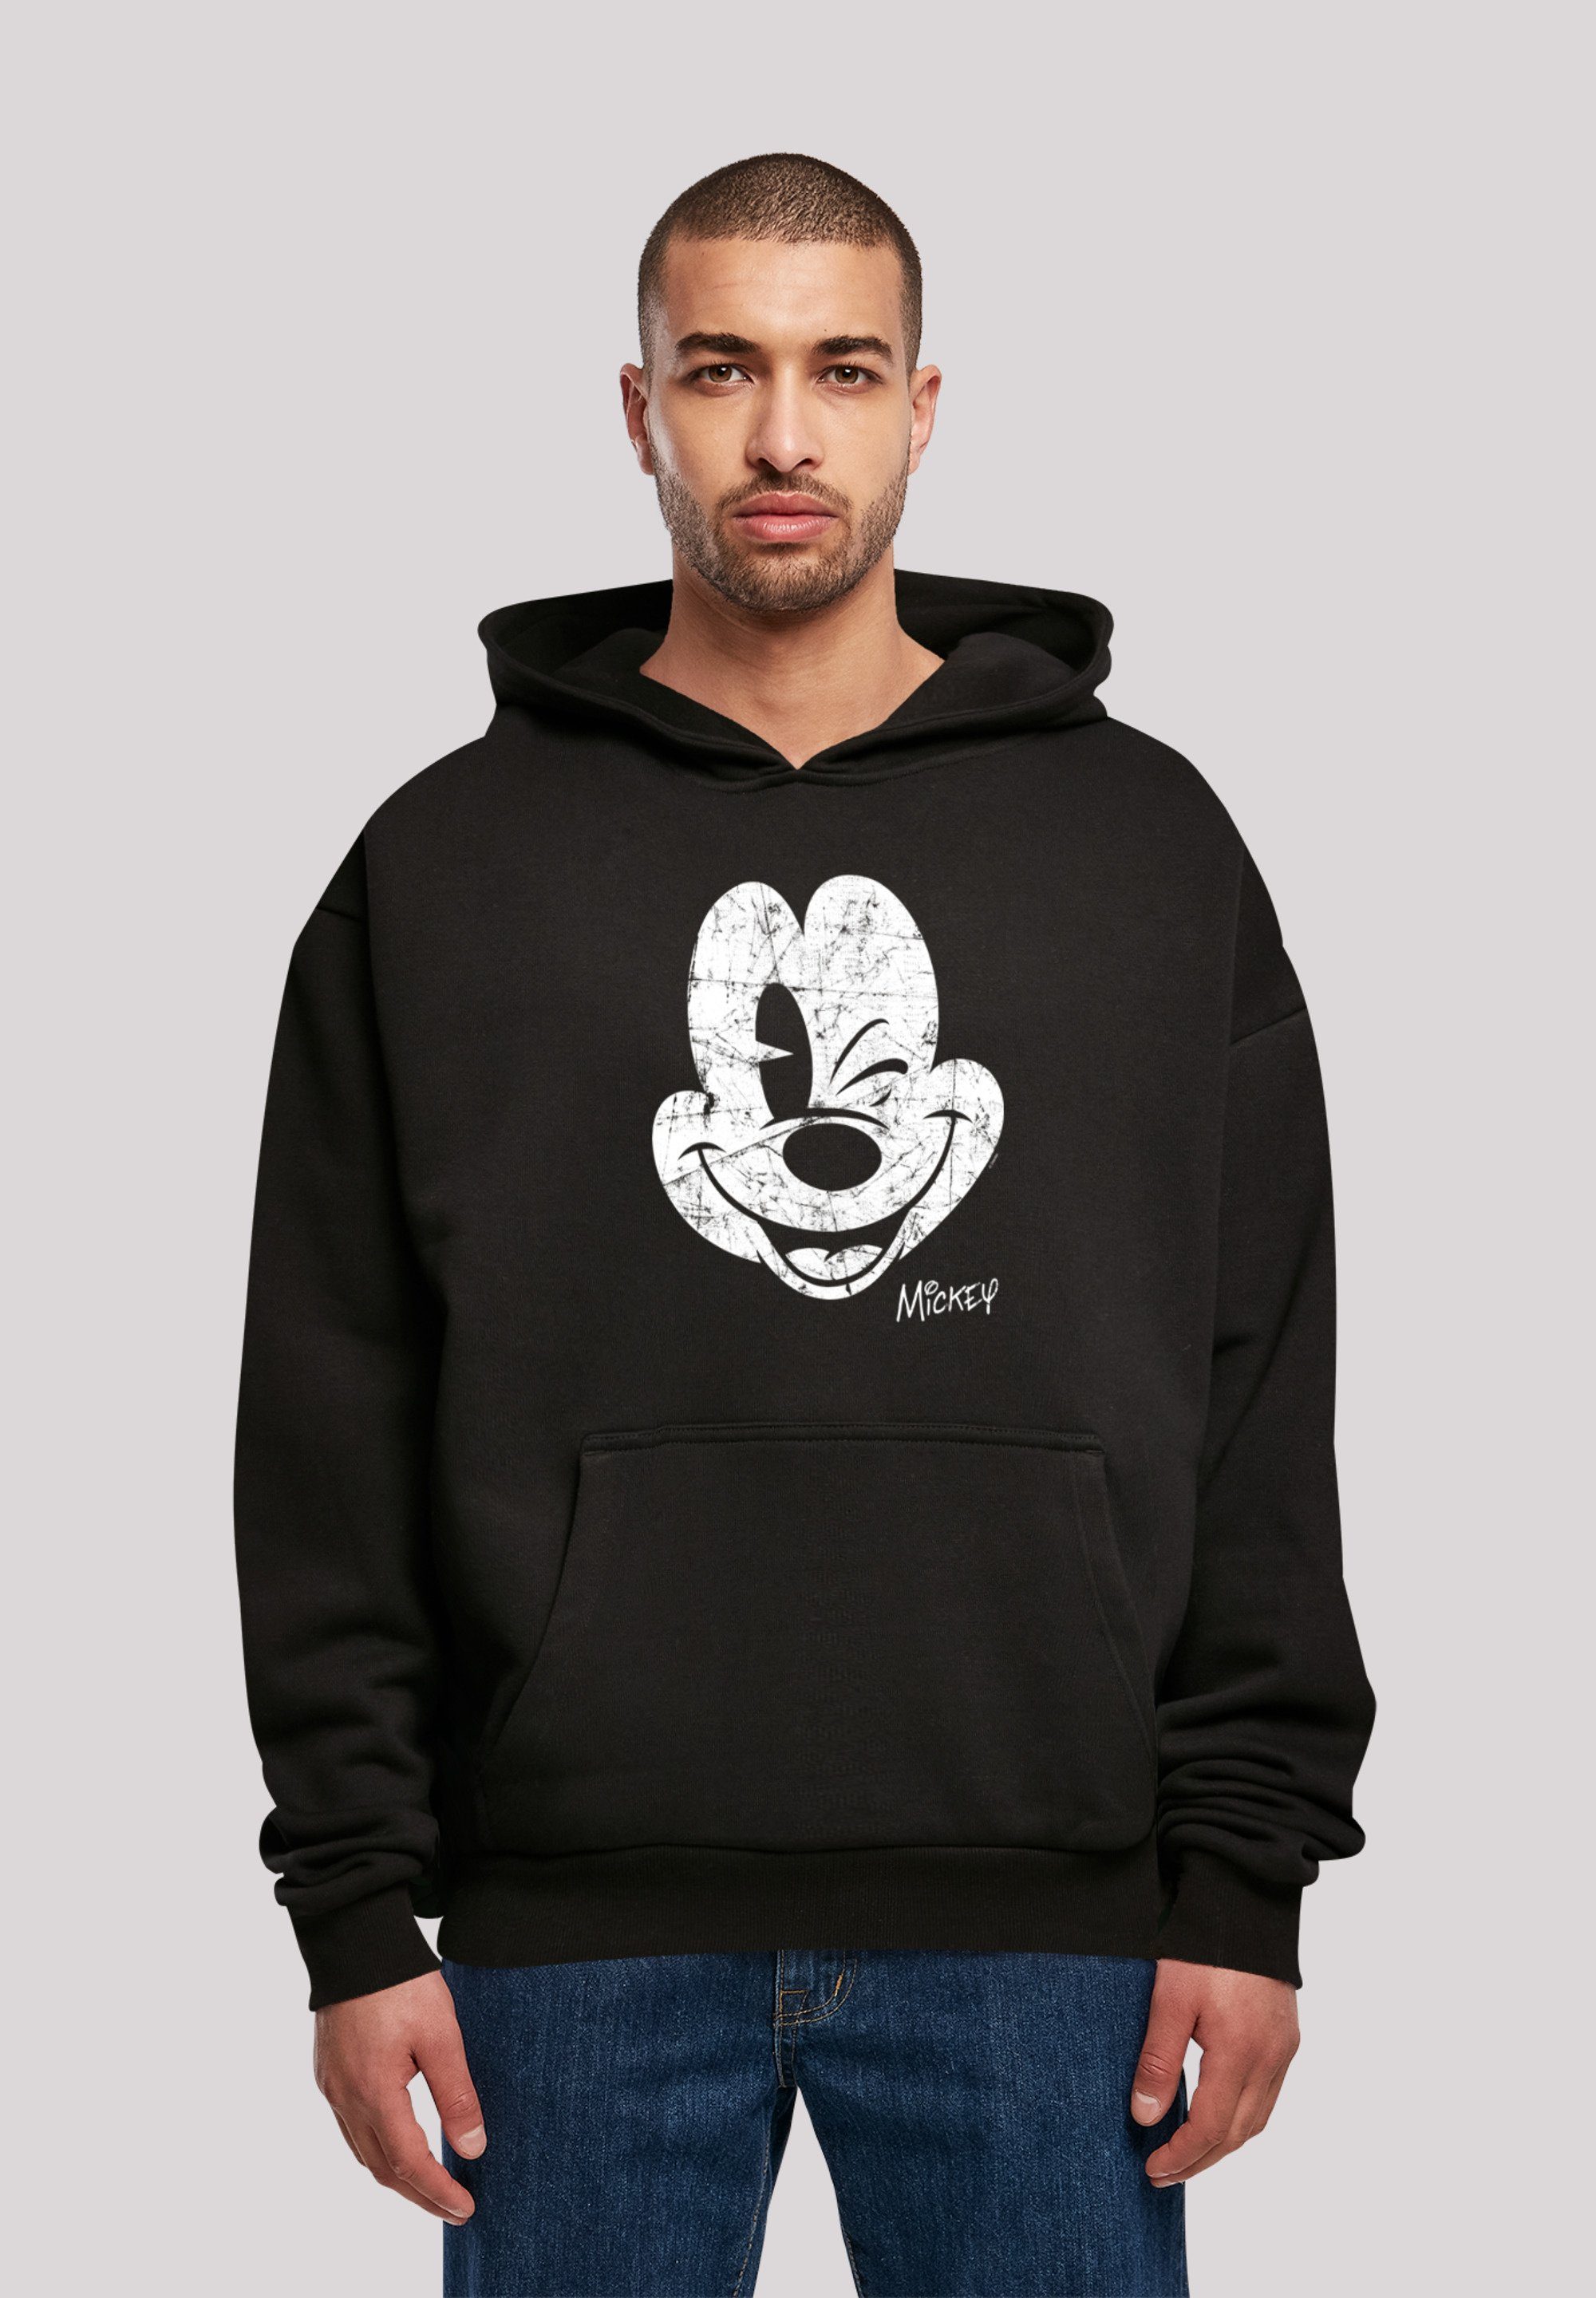 Print, Micky Micky - Mickey Vintage Gesicht - Disney Vintage Sweatshirt F4NT4STIC Disney Gesicht Maus Maus Mickey